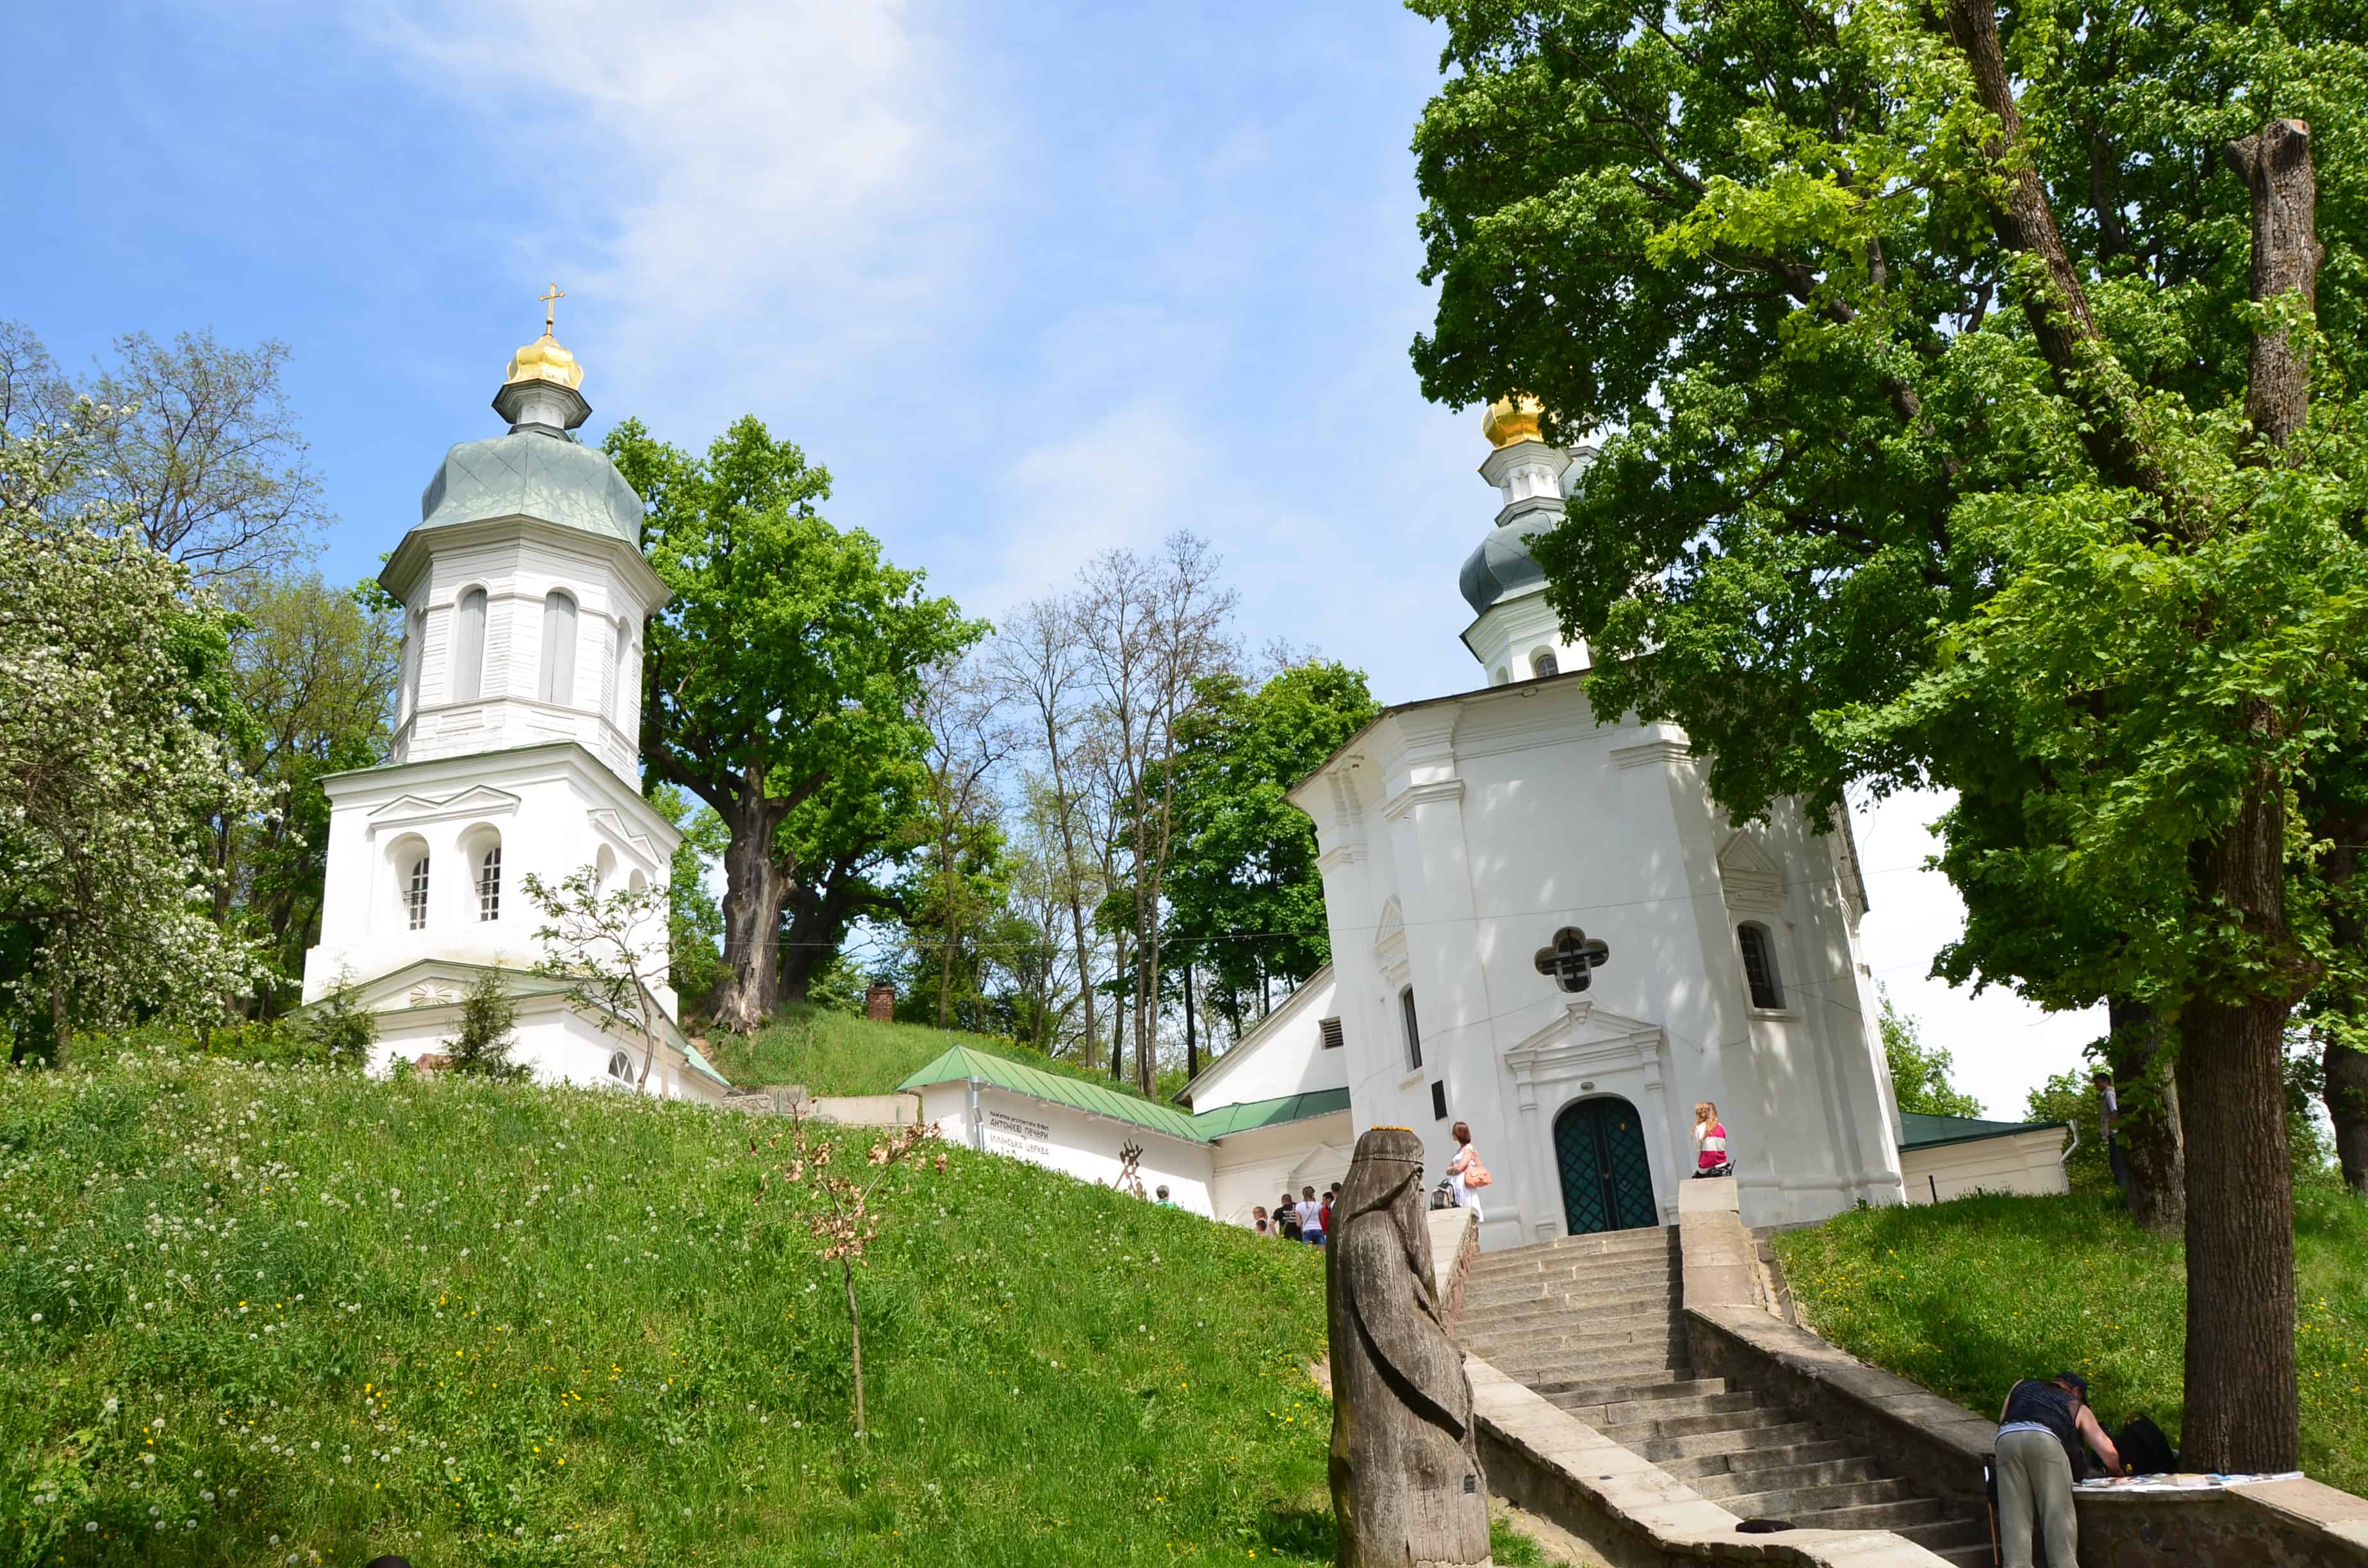 St. Elias Monastery in Chernihiv, Ukraine